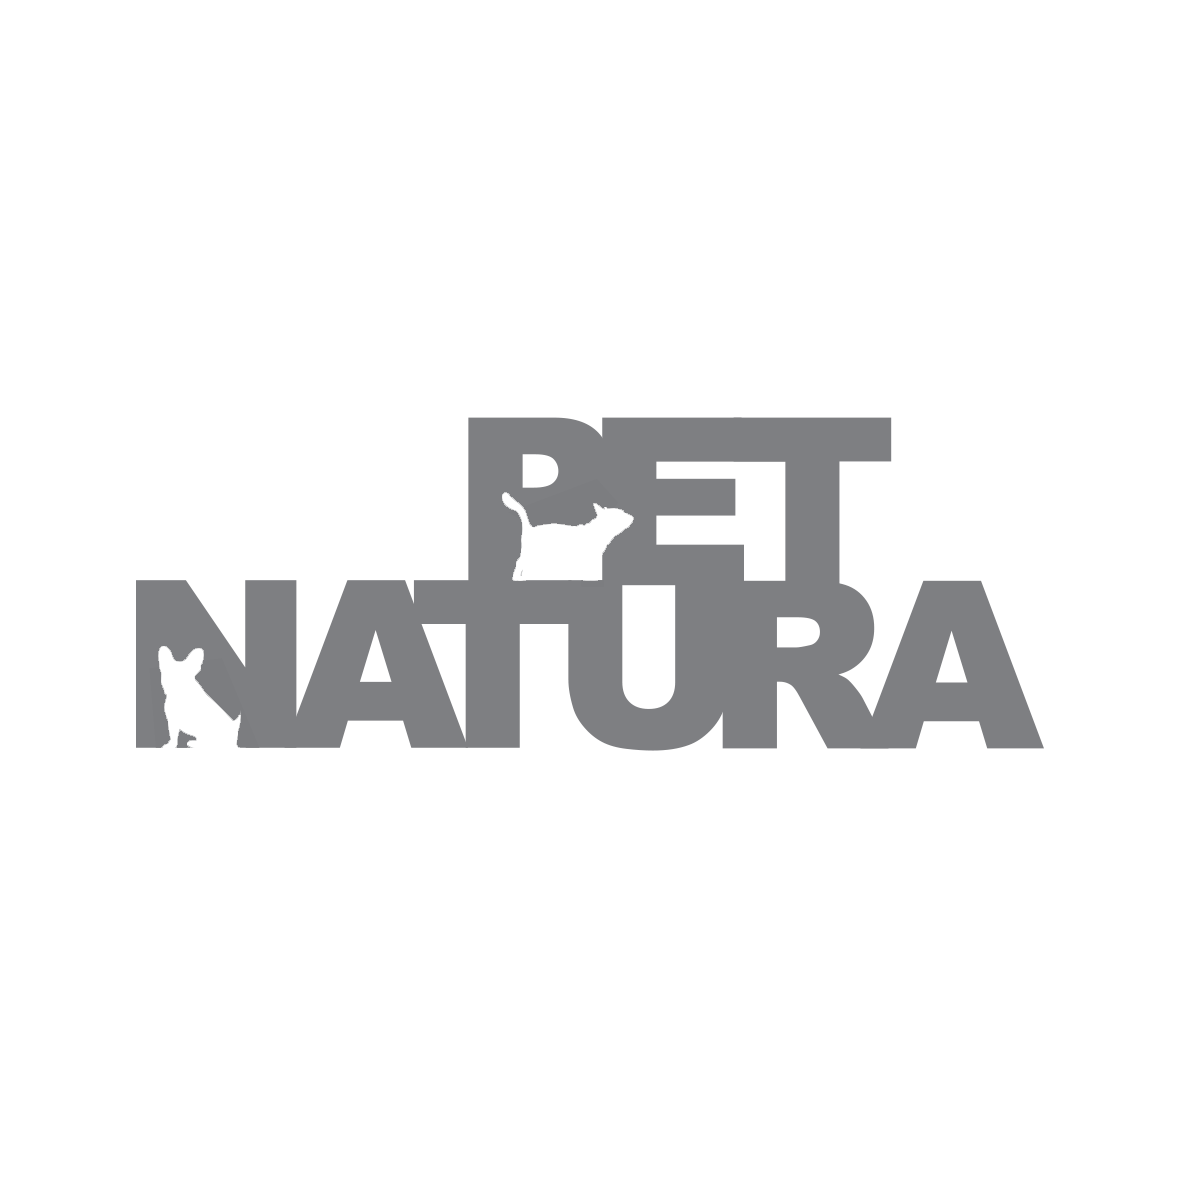 PetNatura Logo_Greyscale.png